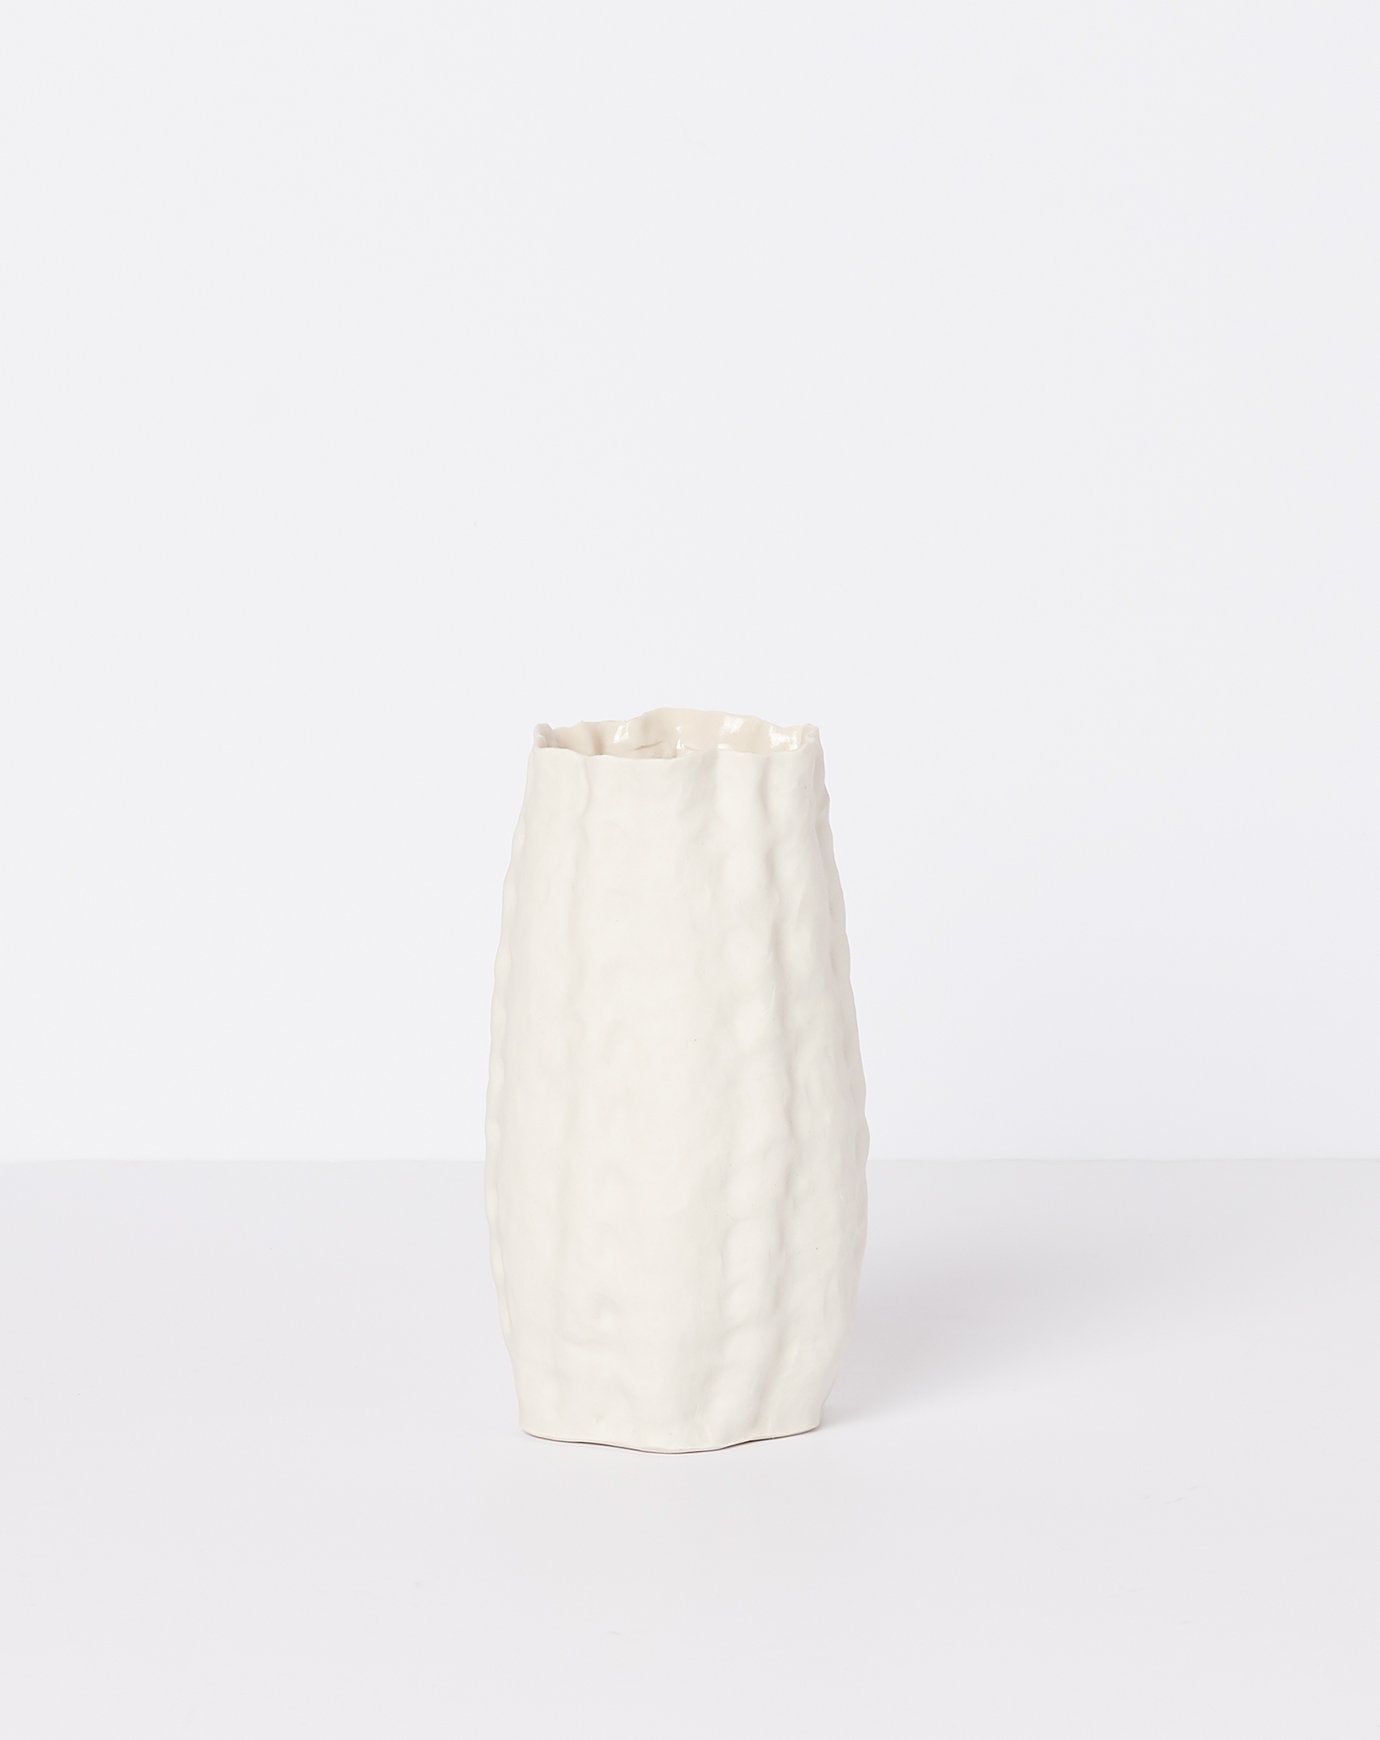 Lily Fein Ribbed Vase